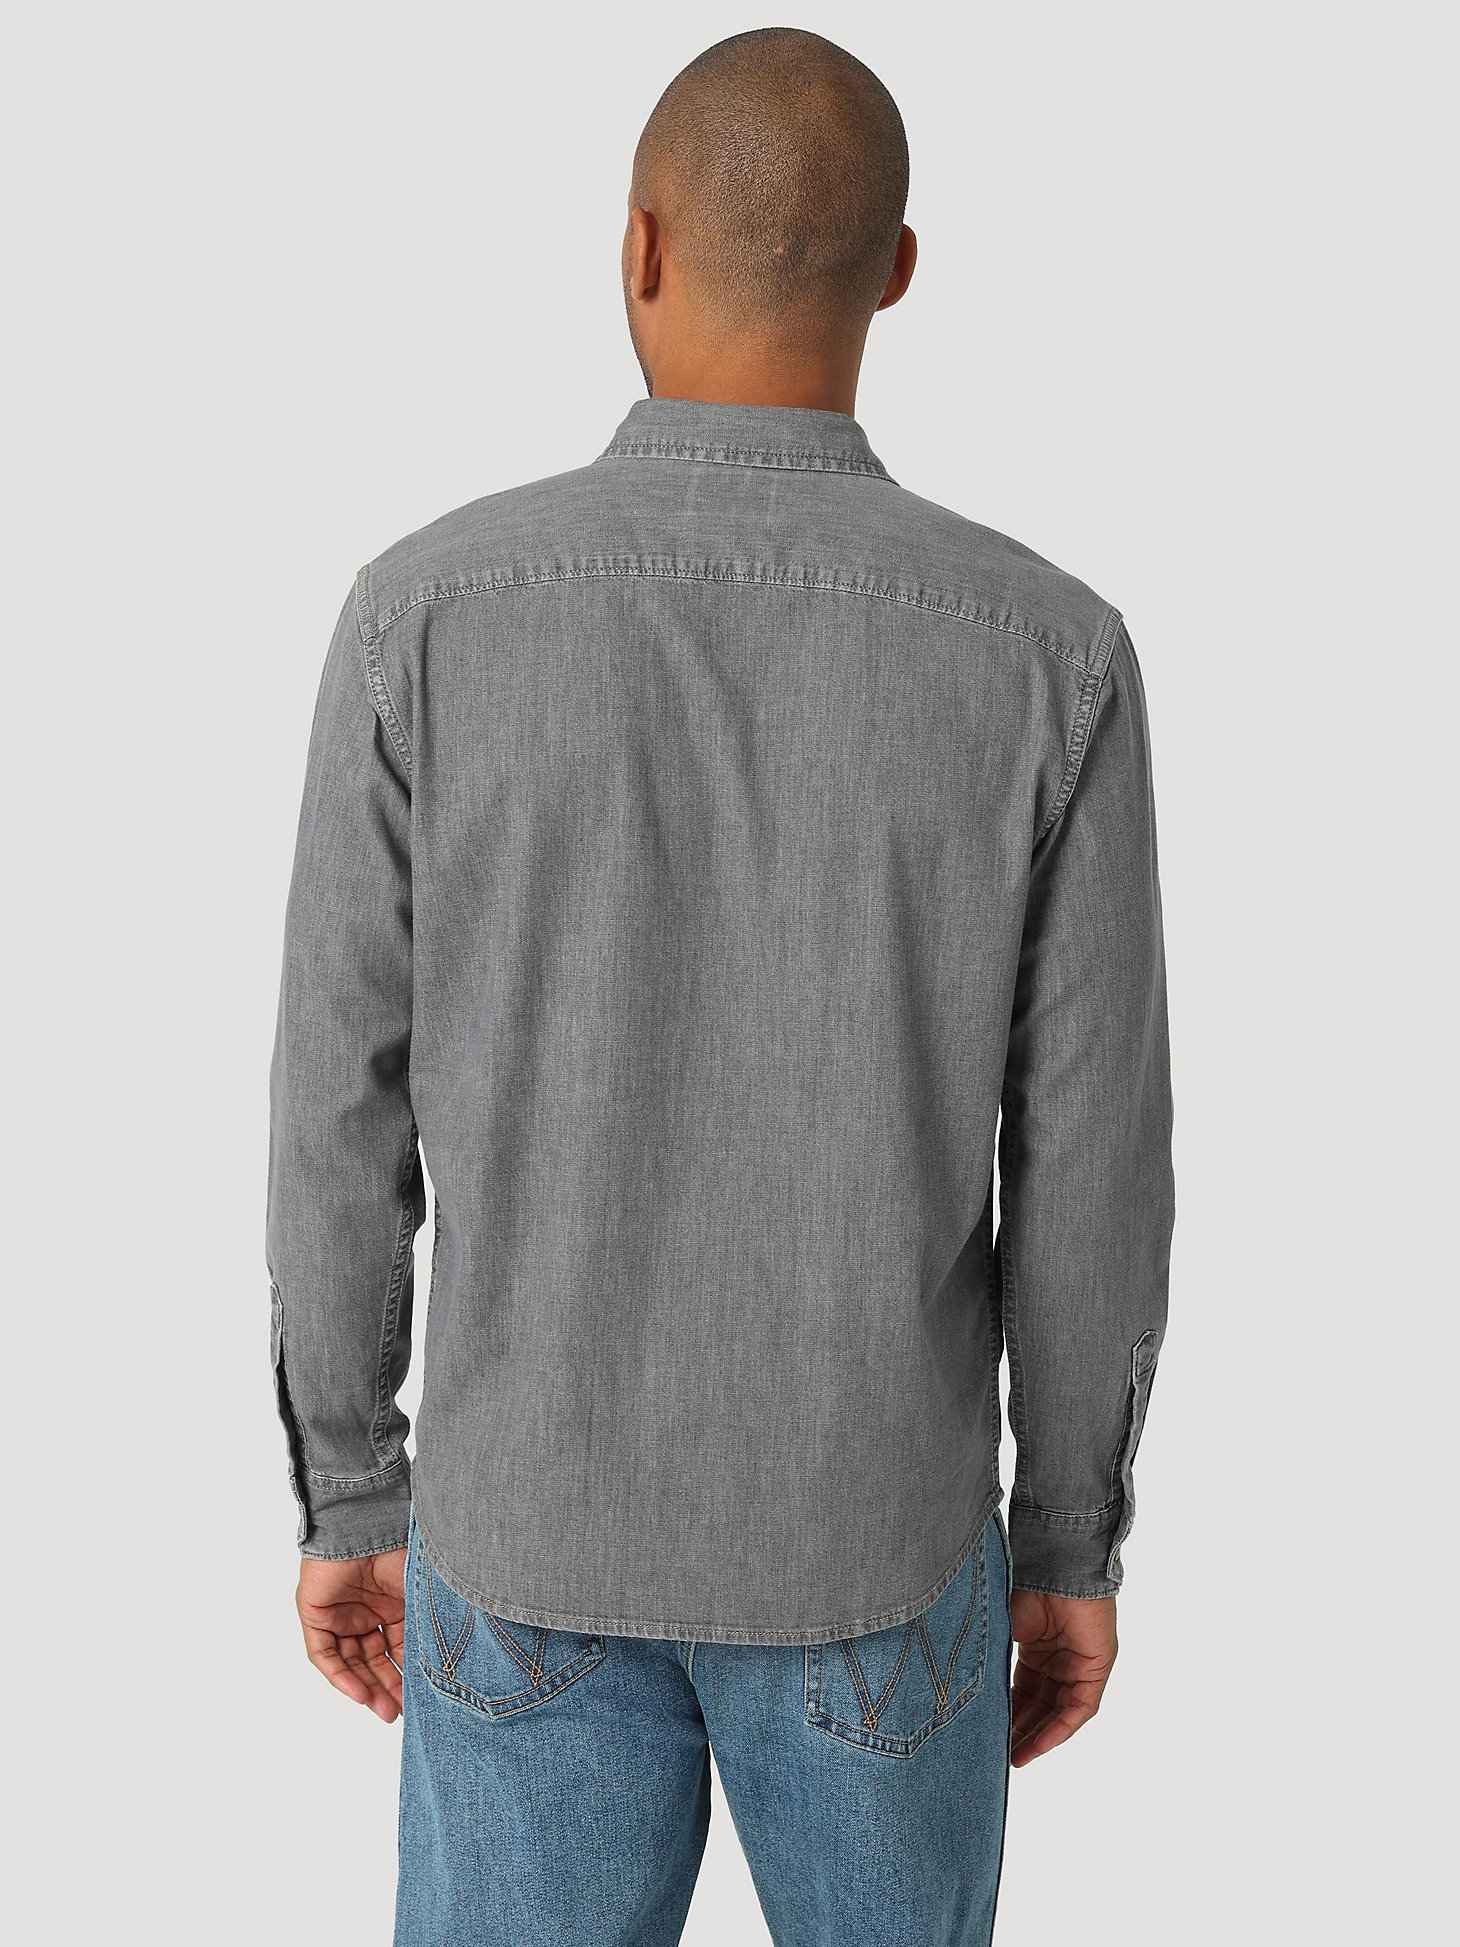 Men's Denim Western Snap Front Shirt in Grey Denim alternative view 1